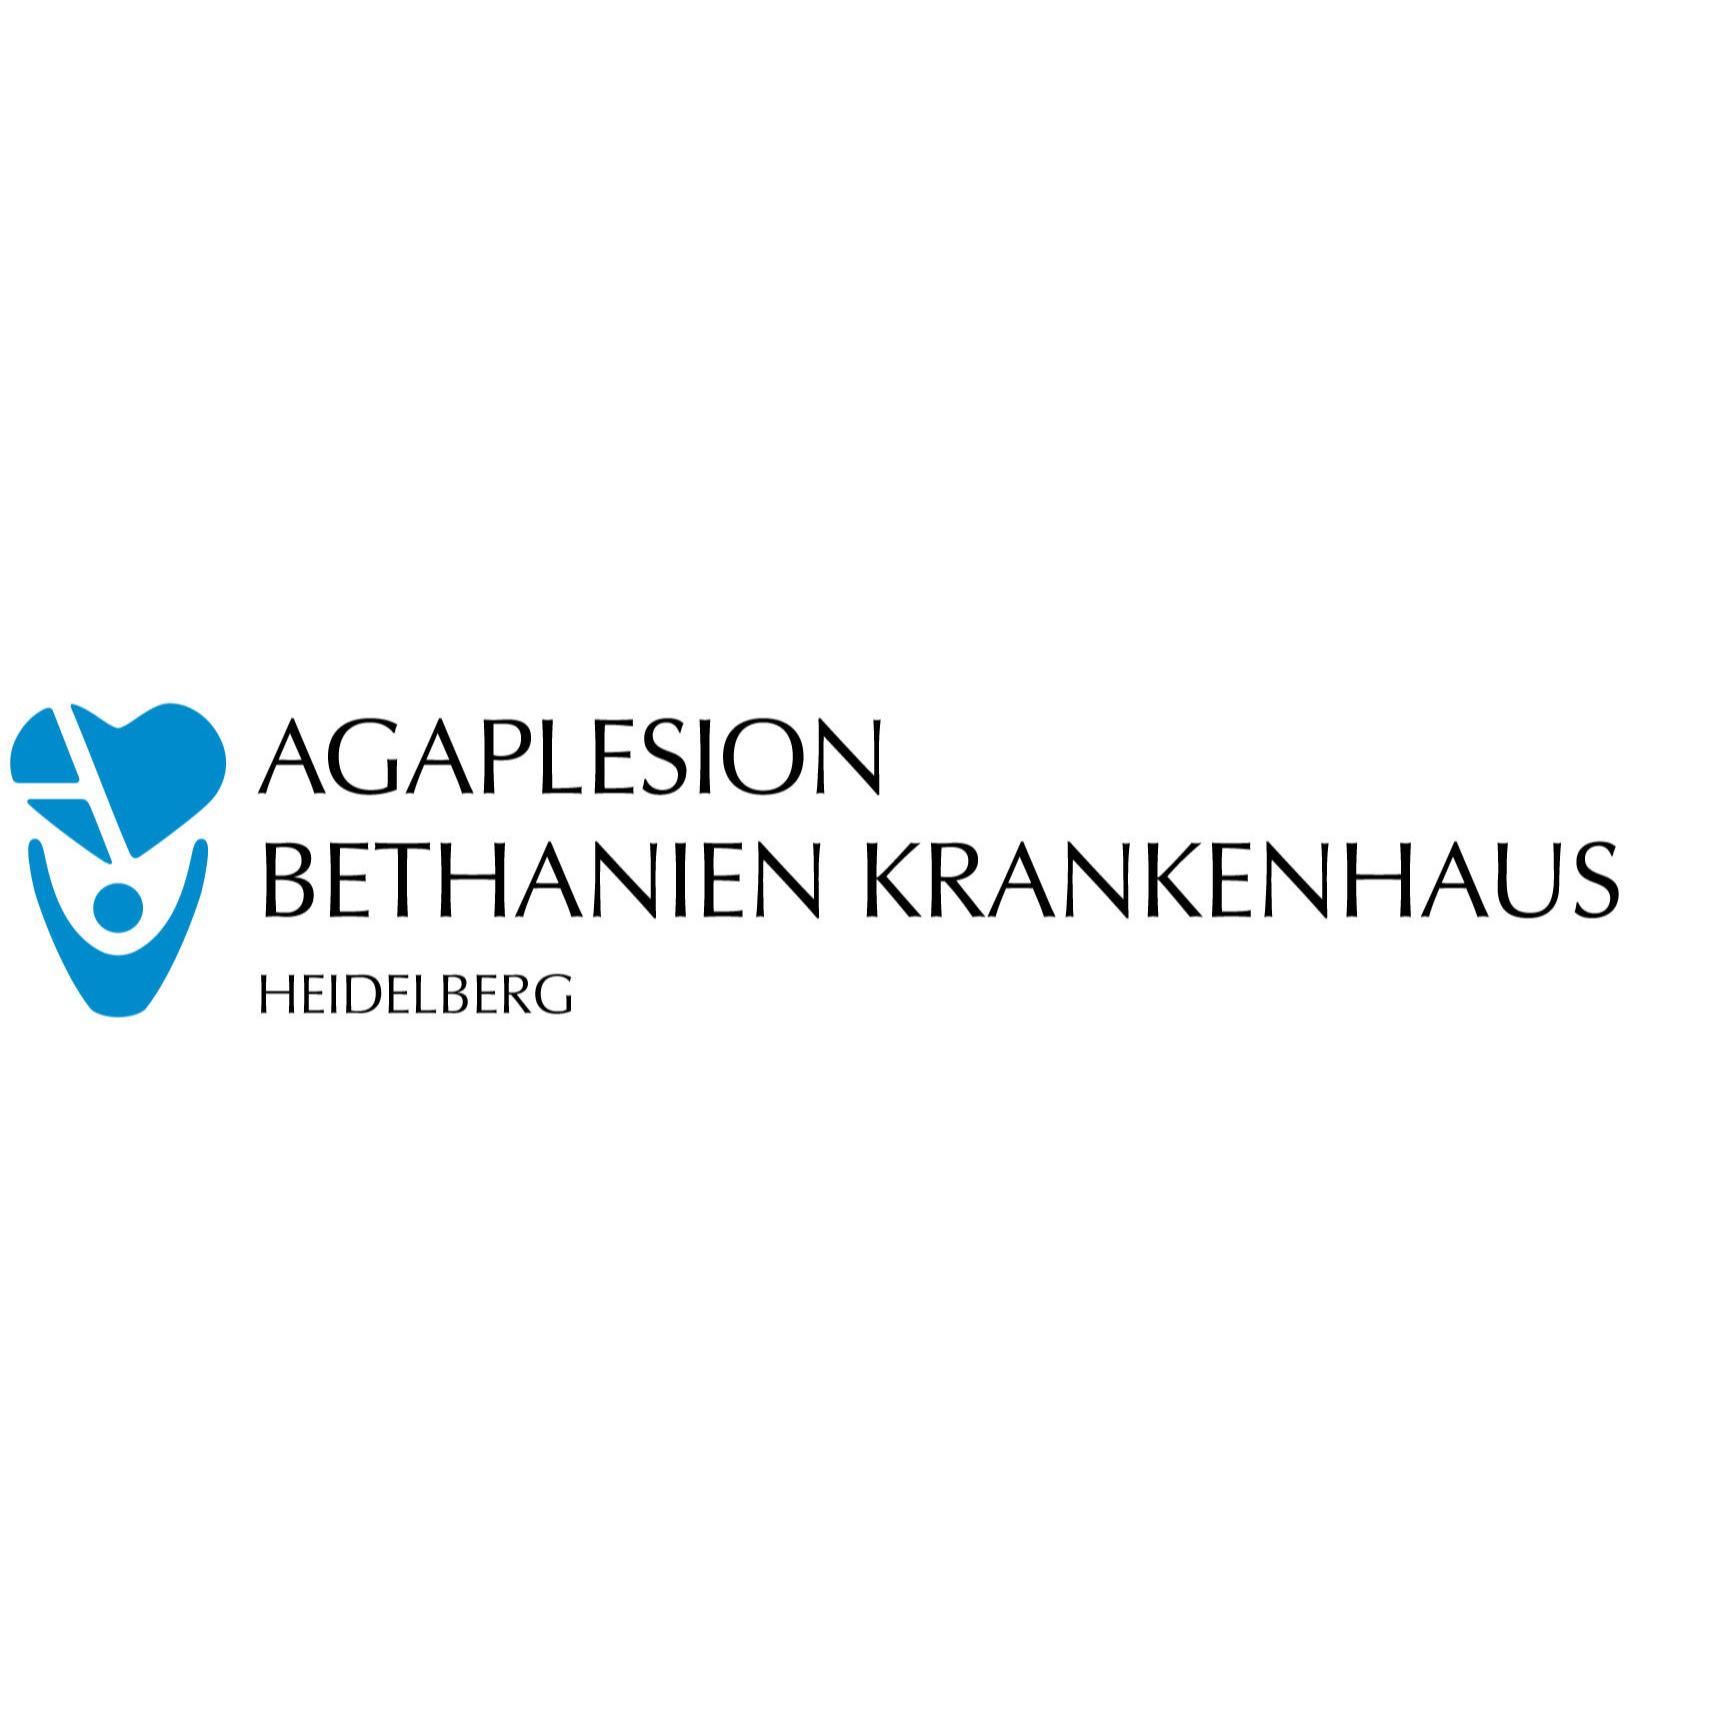 Bild zu REGE e. V. (Rehabilitationssport in der Geriatrie) am AGAPLESION BETHANIEN KRANKENHAUS HEIDELBERG in Heidelberg